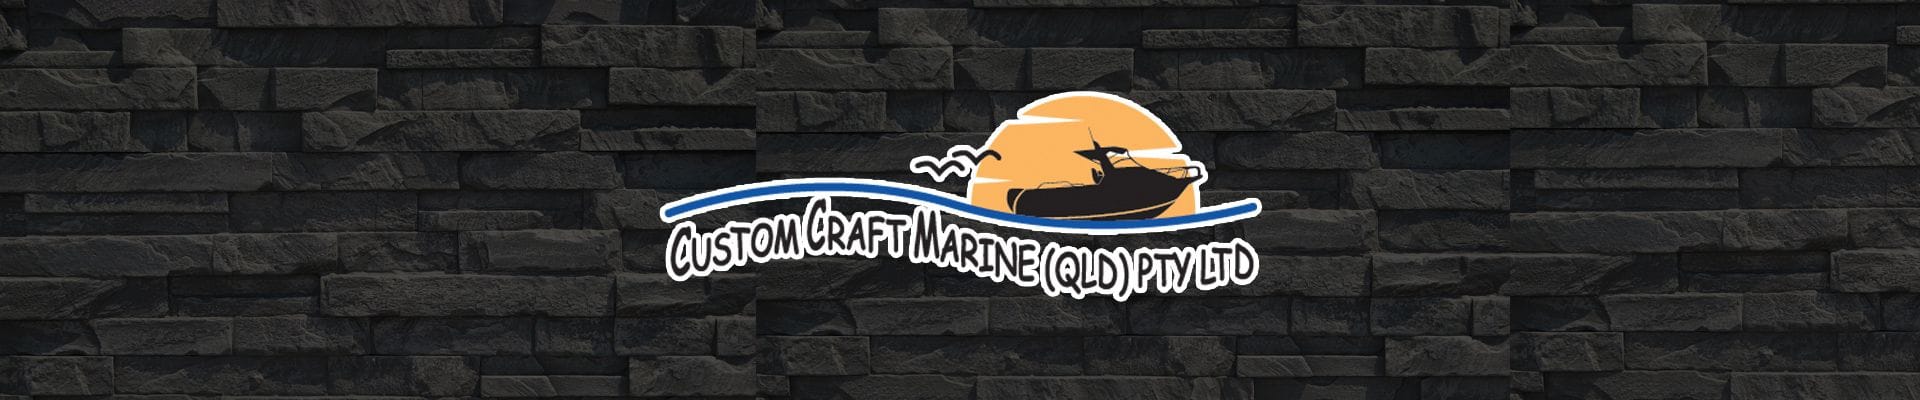 custom craft marine